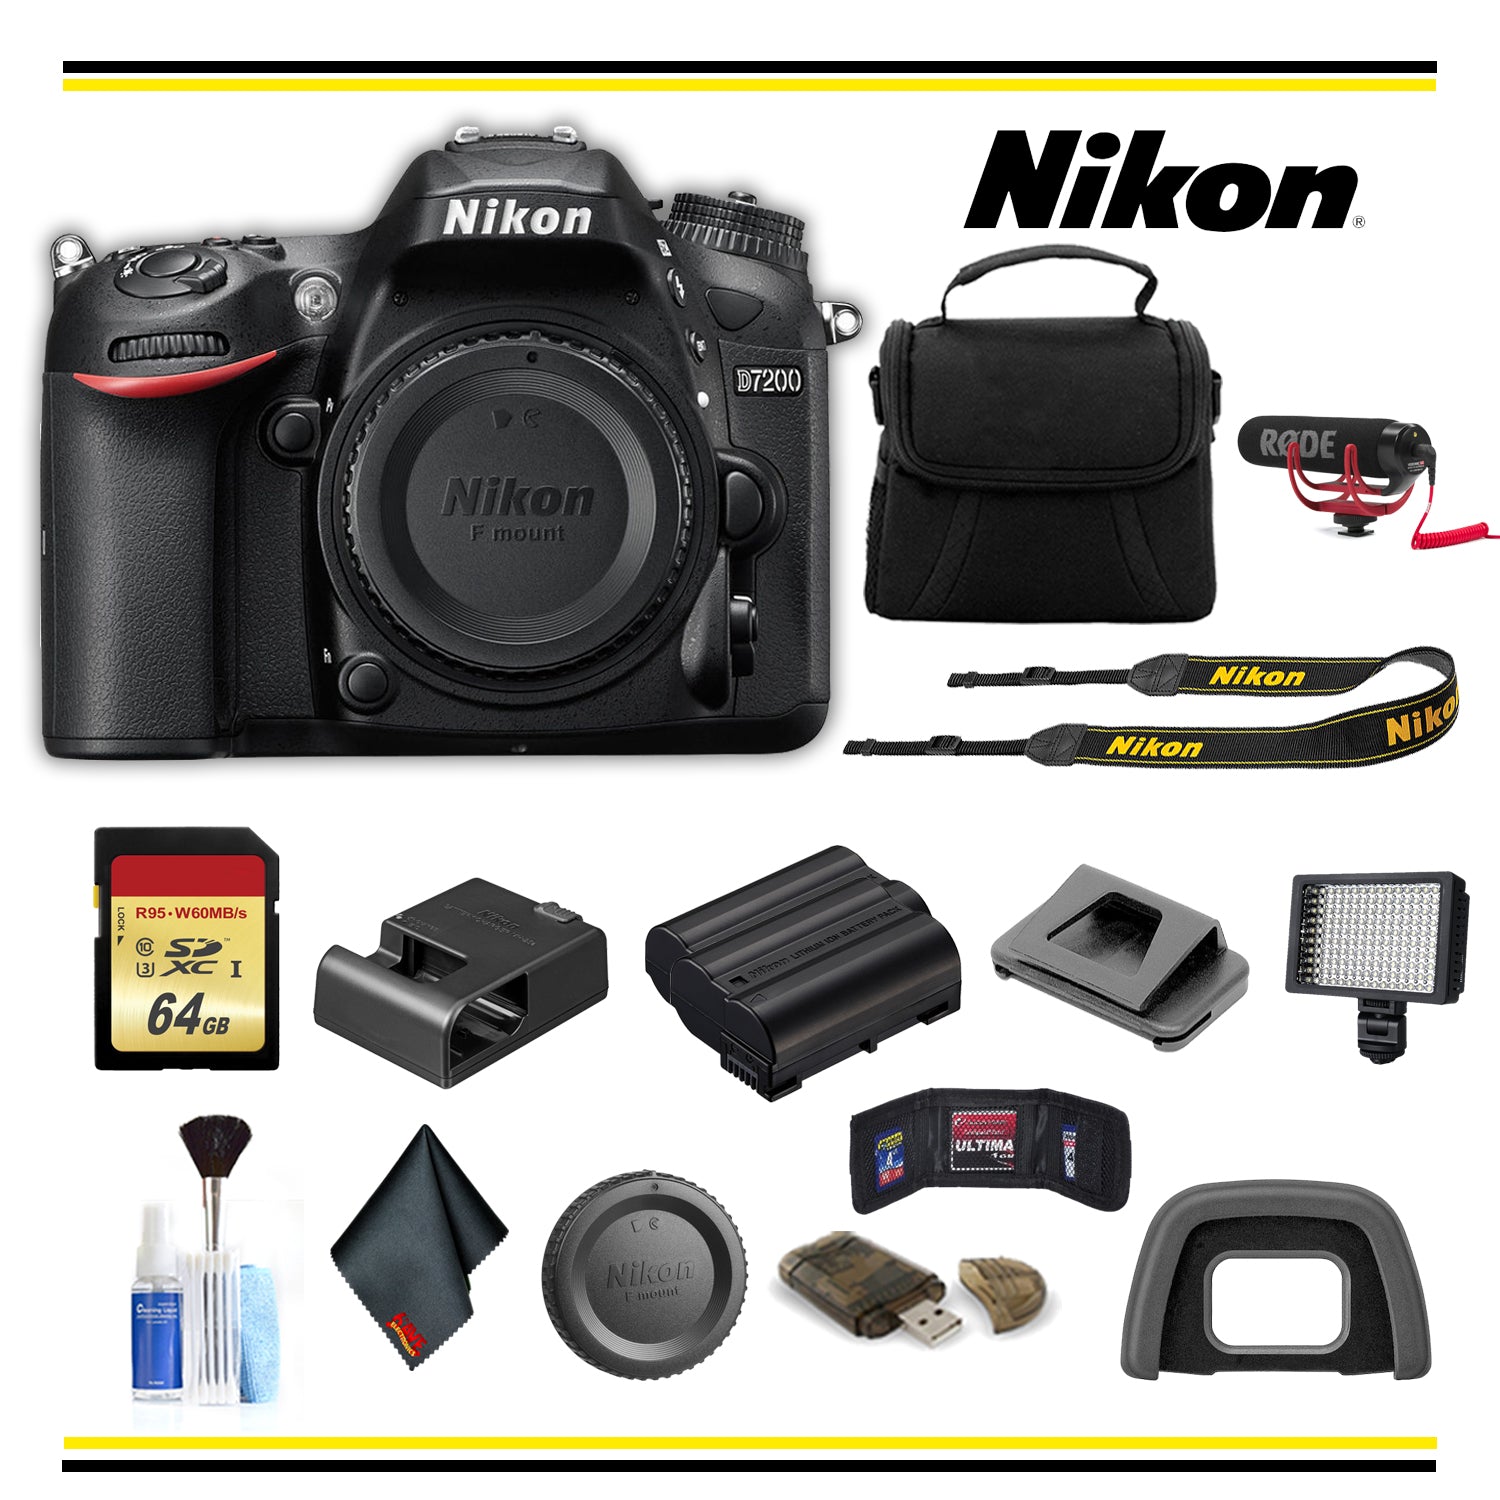 Nikon D7200 DSLR Camera (1554 ) Advanced Bundle W/ Bag, Extra Battery, LED Light, Mic, and More - (International Model )